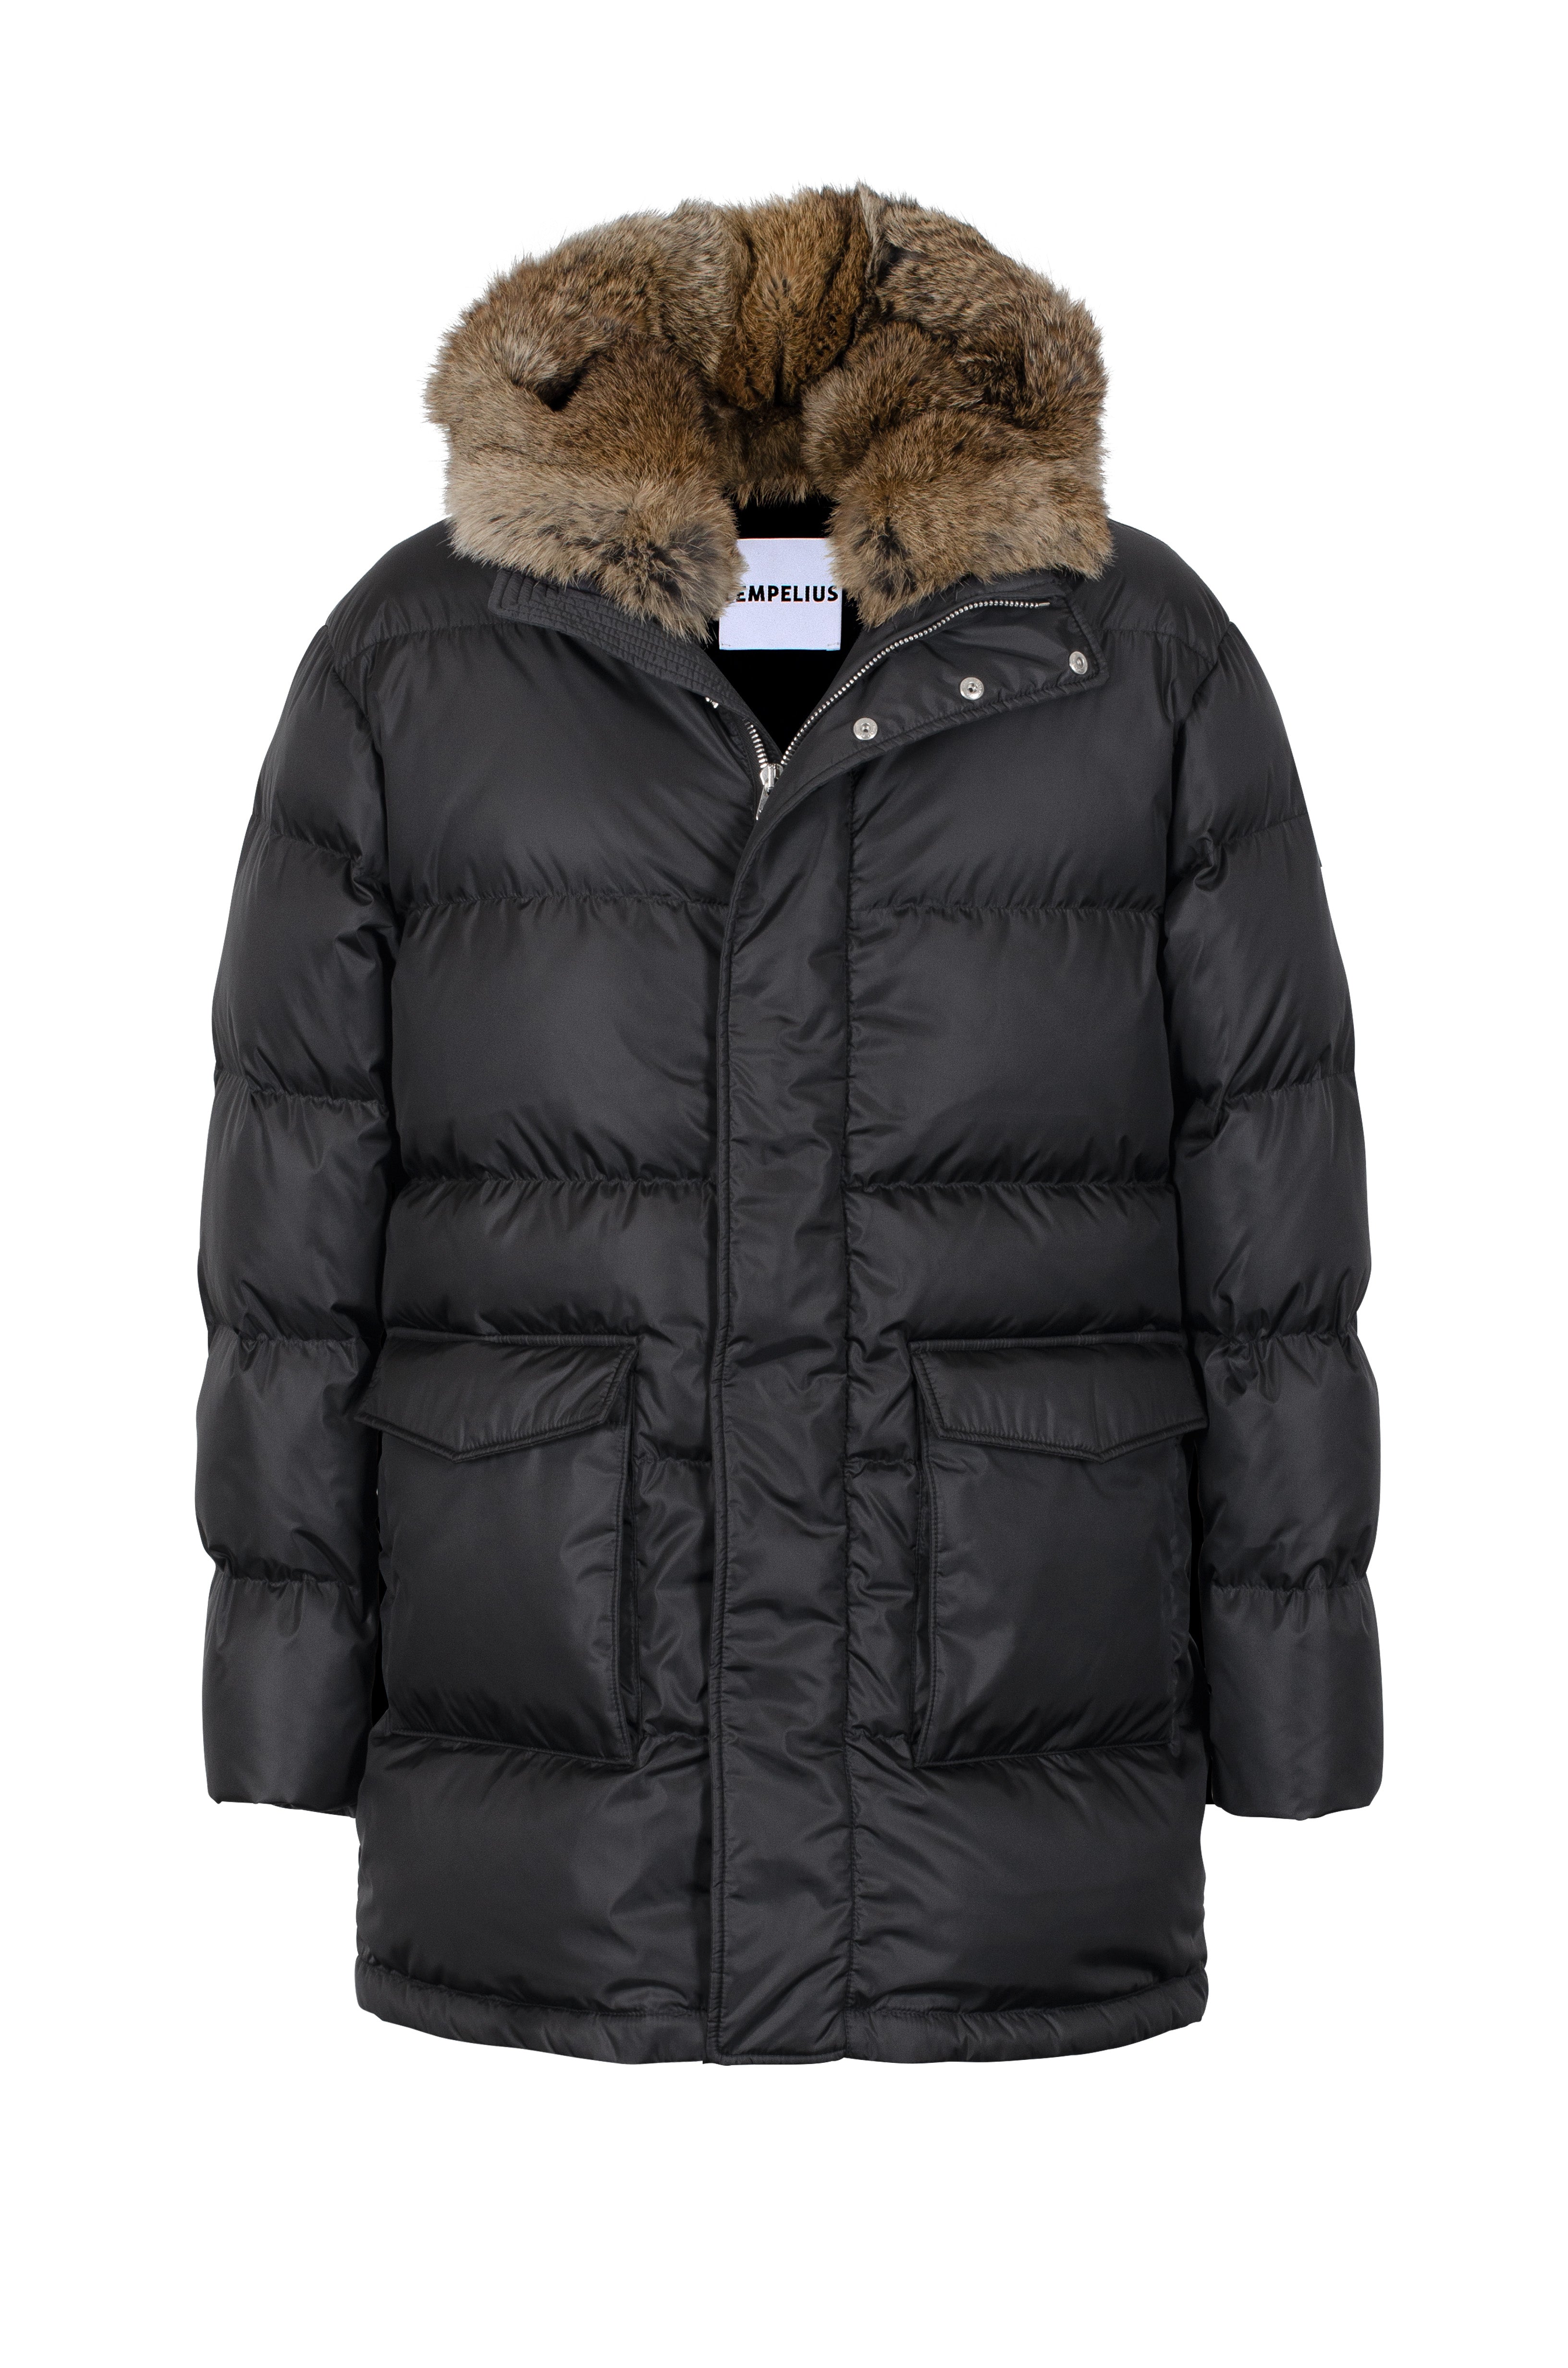 Lempelius Down coat with fur hood in carbongrey